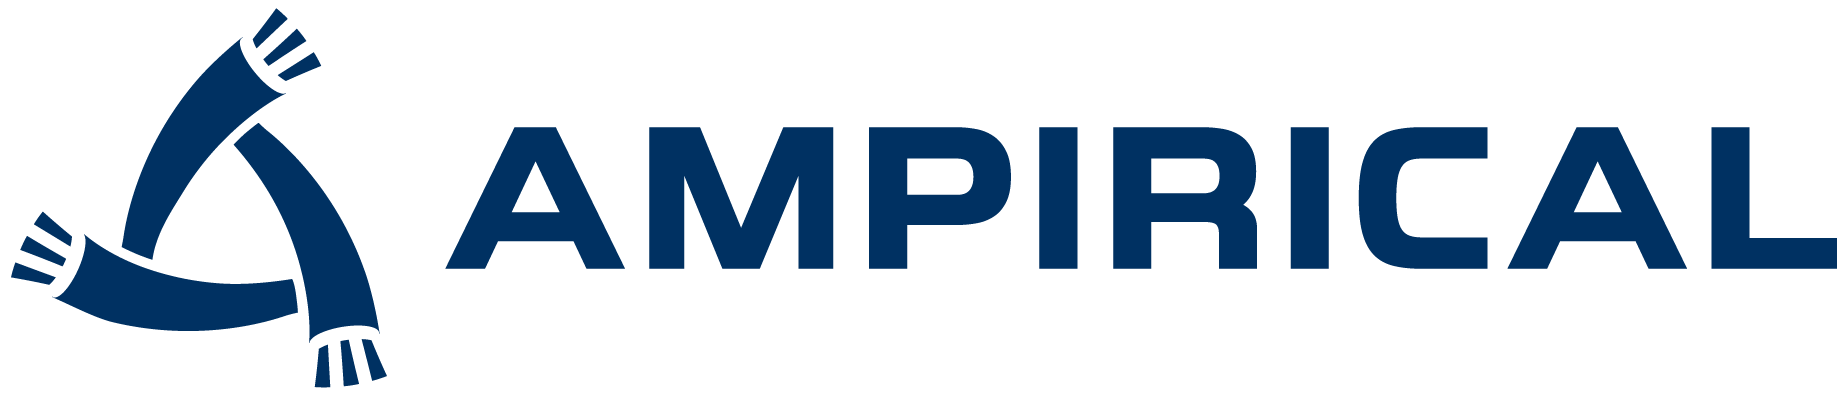 Ampirical Solutions LLC Company Logo